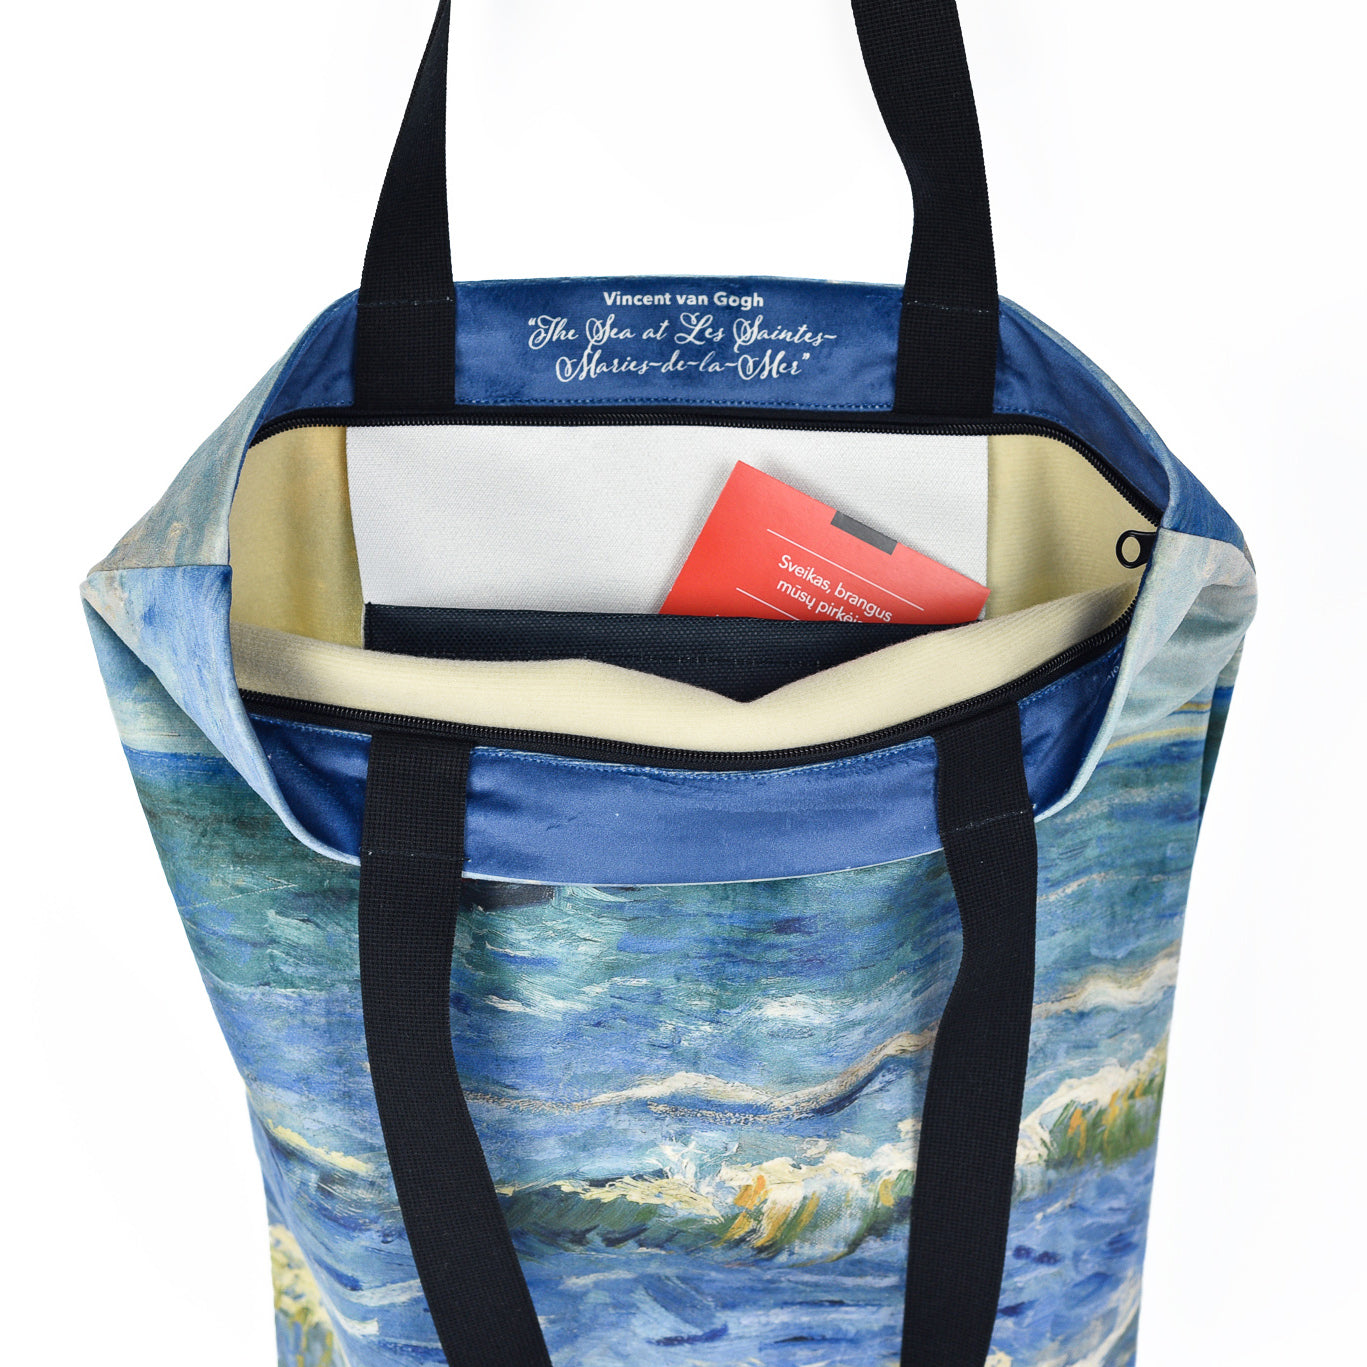 Pirkinių krepšys Vincent van Gogh "The Sea at Les Saintes-Maries-de-la-Mer"